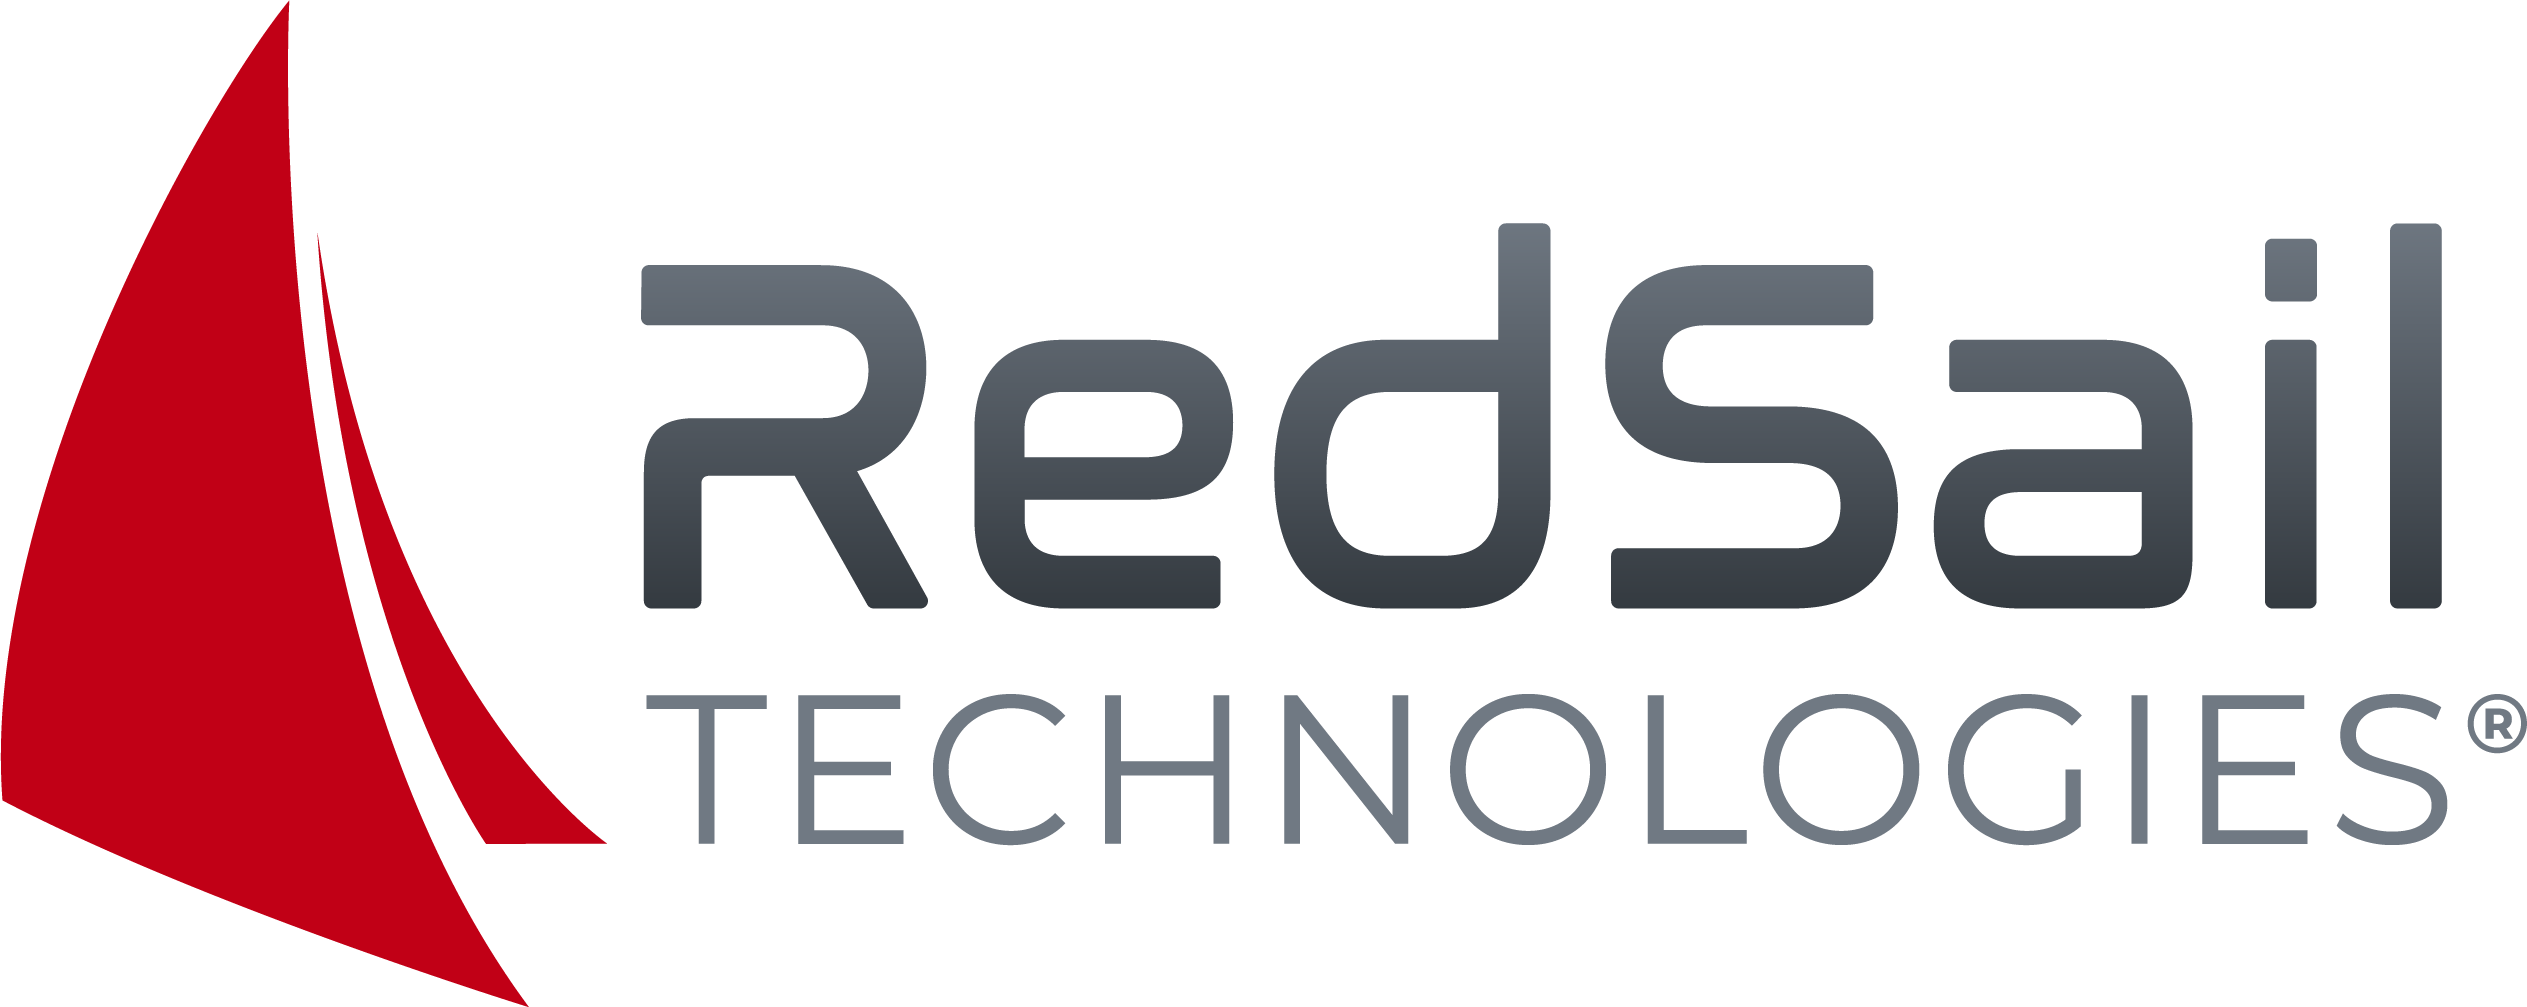 RedSail Technologies